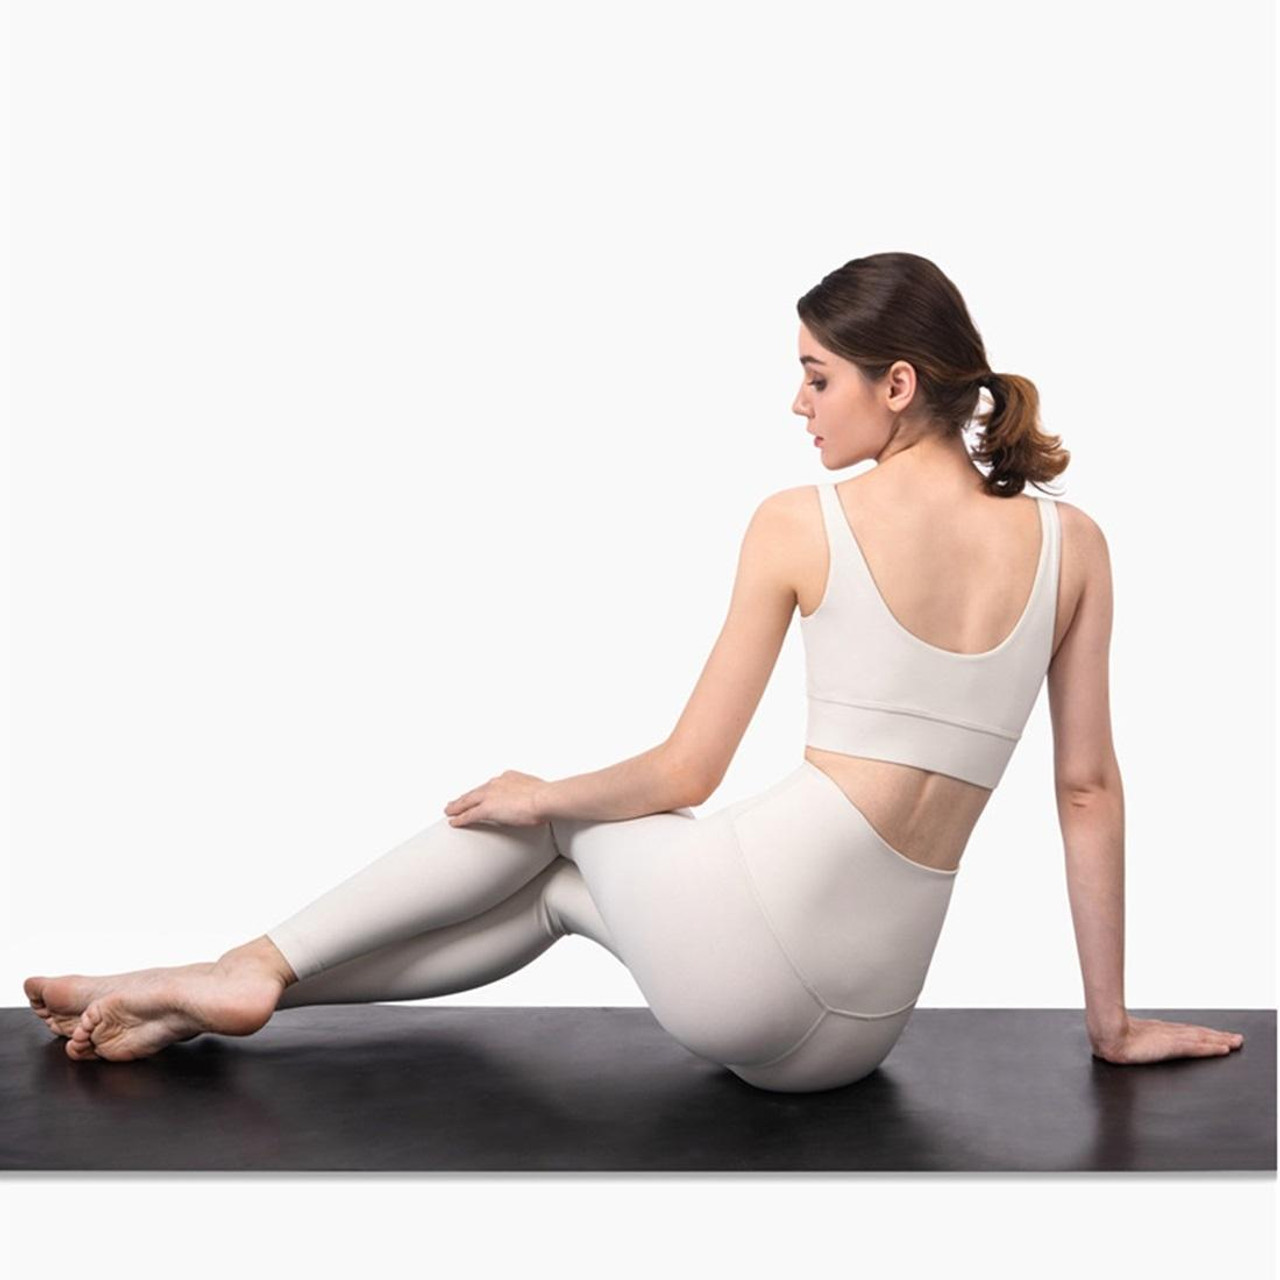 Charming Deep V Shockproof Gathered Fitness Yoga Underwear (Color:Light  Ivory Size:L), snatcher